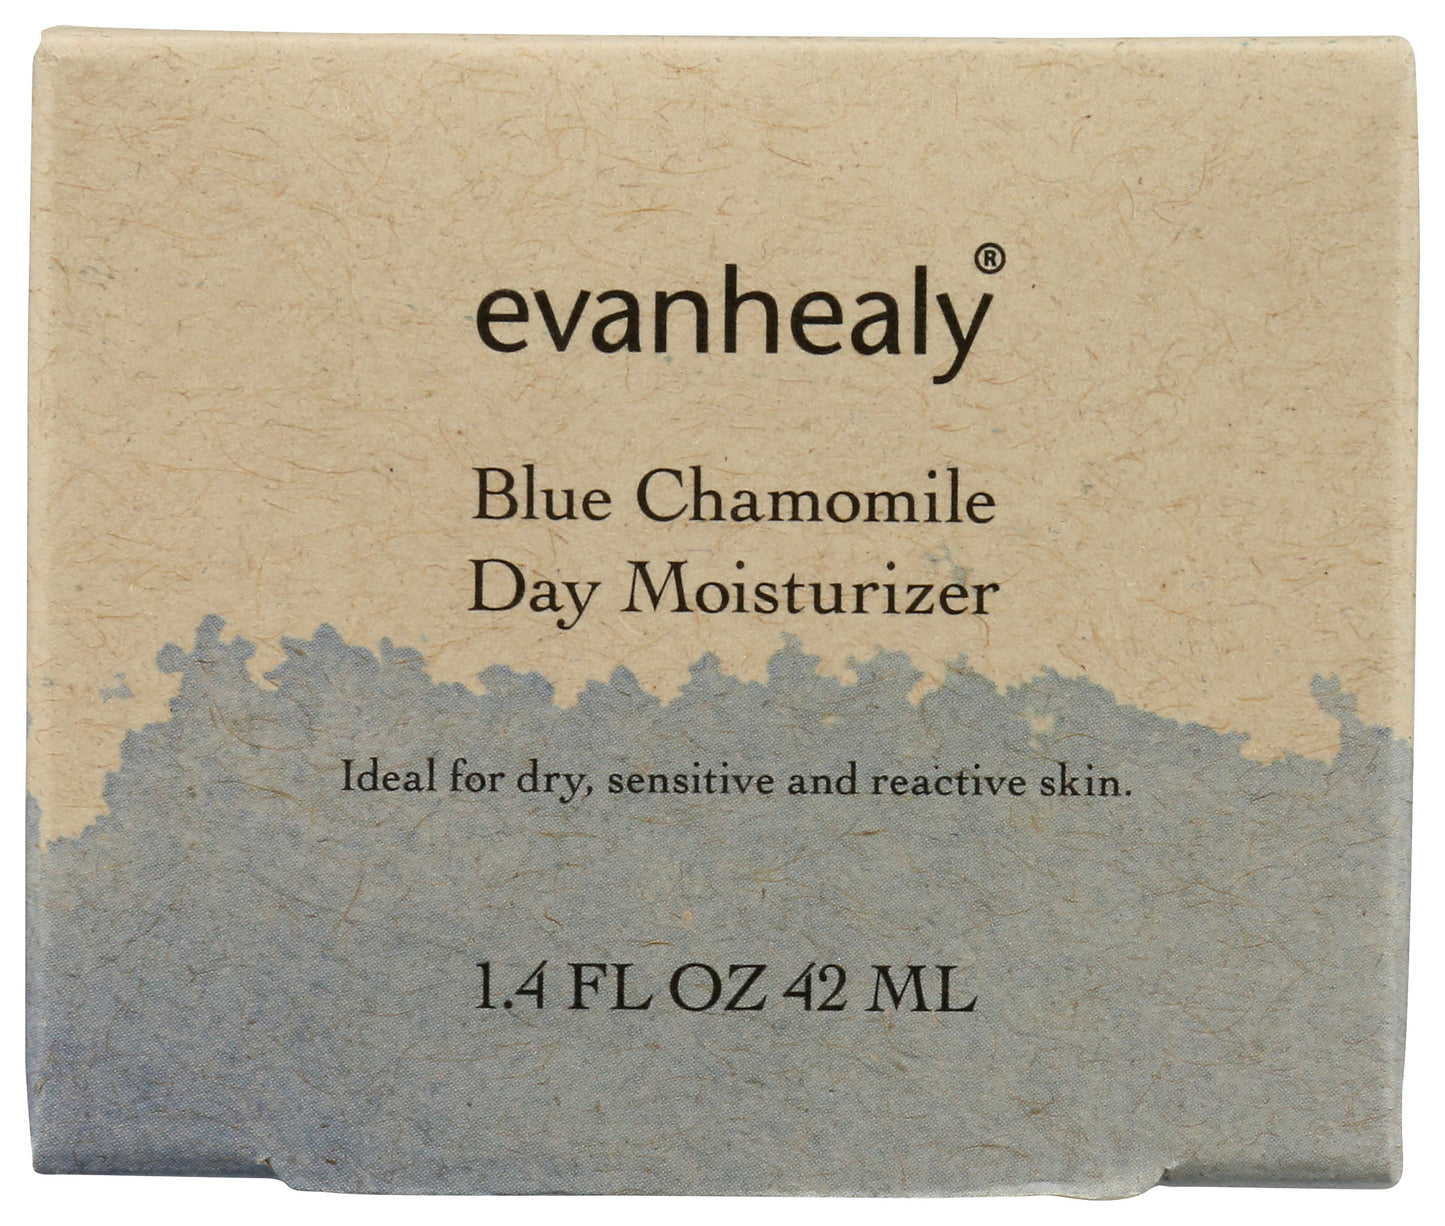 evanhealy Blue Chamomile Day Moisturizer 1.4 Fl. Oz, Front